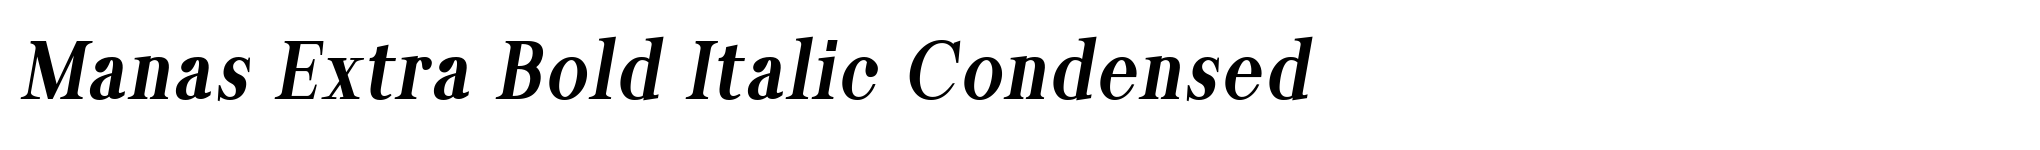 Manas Extra Bold Italic Condensed image